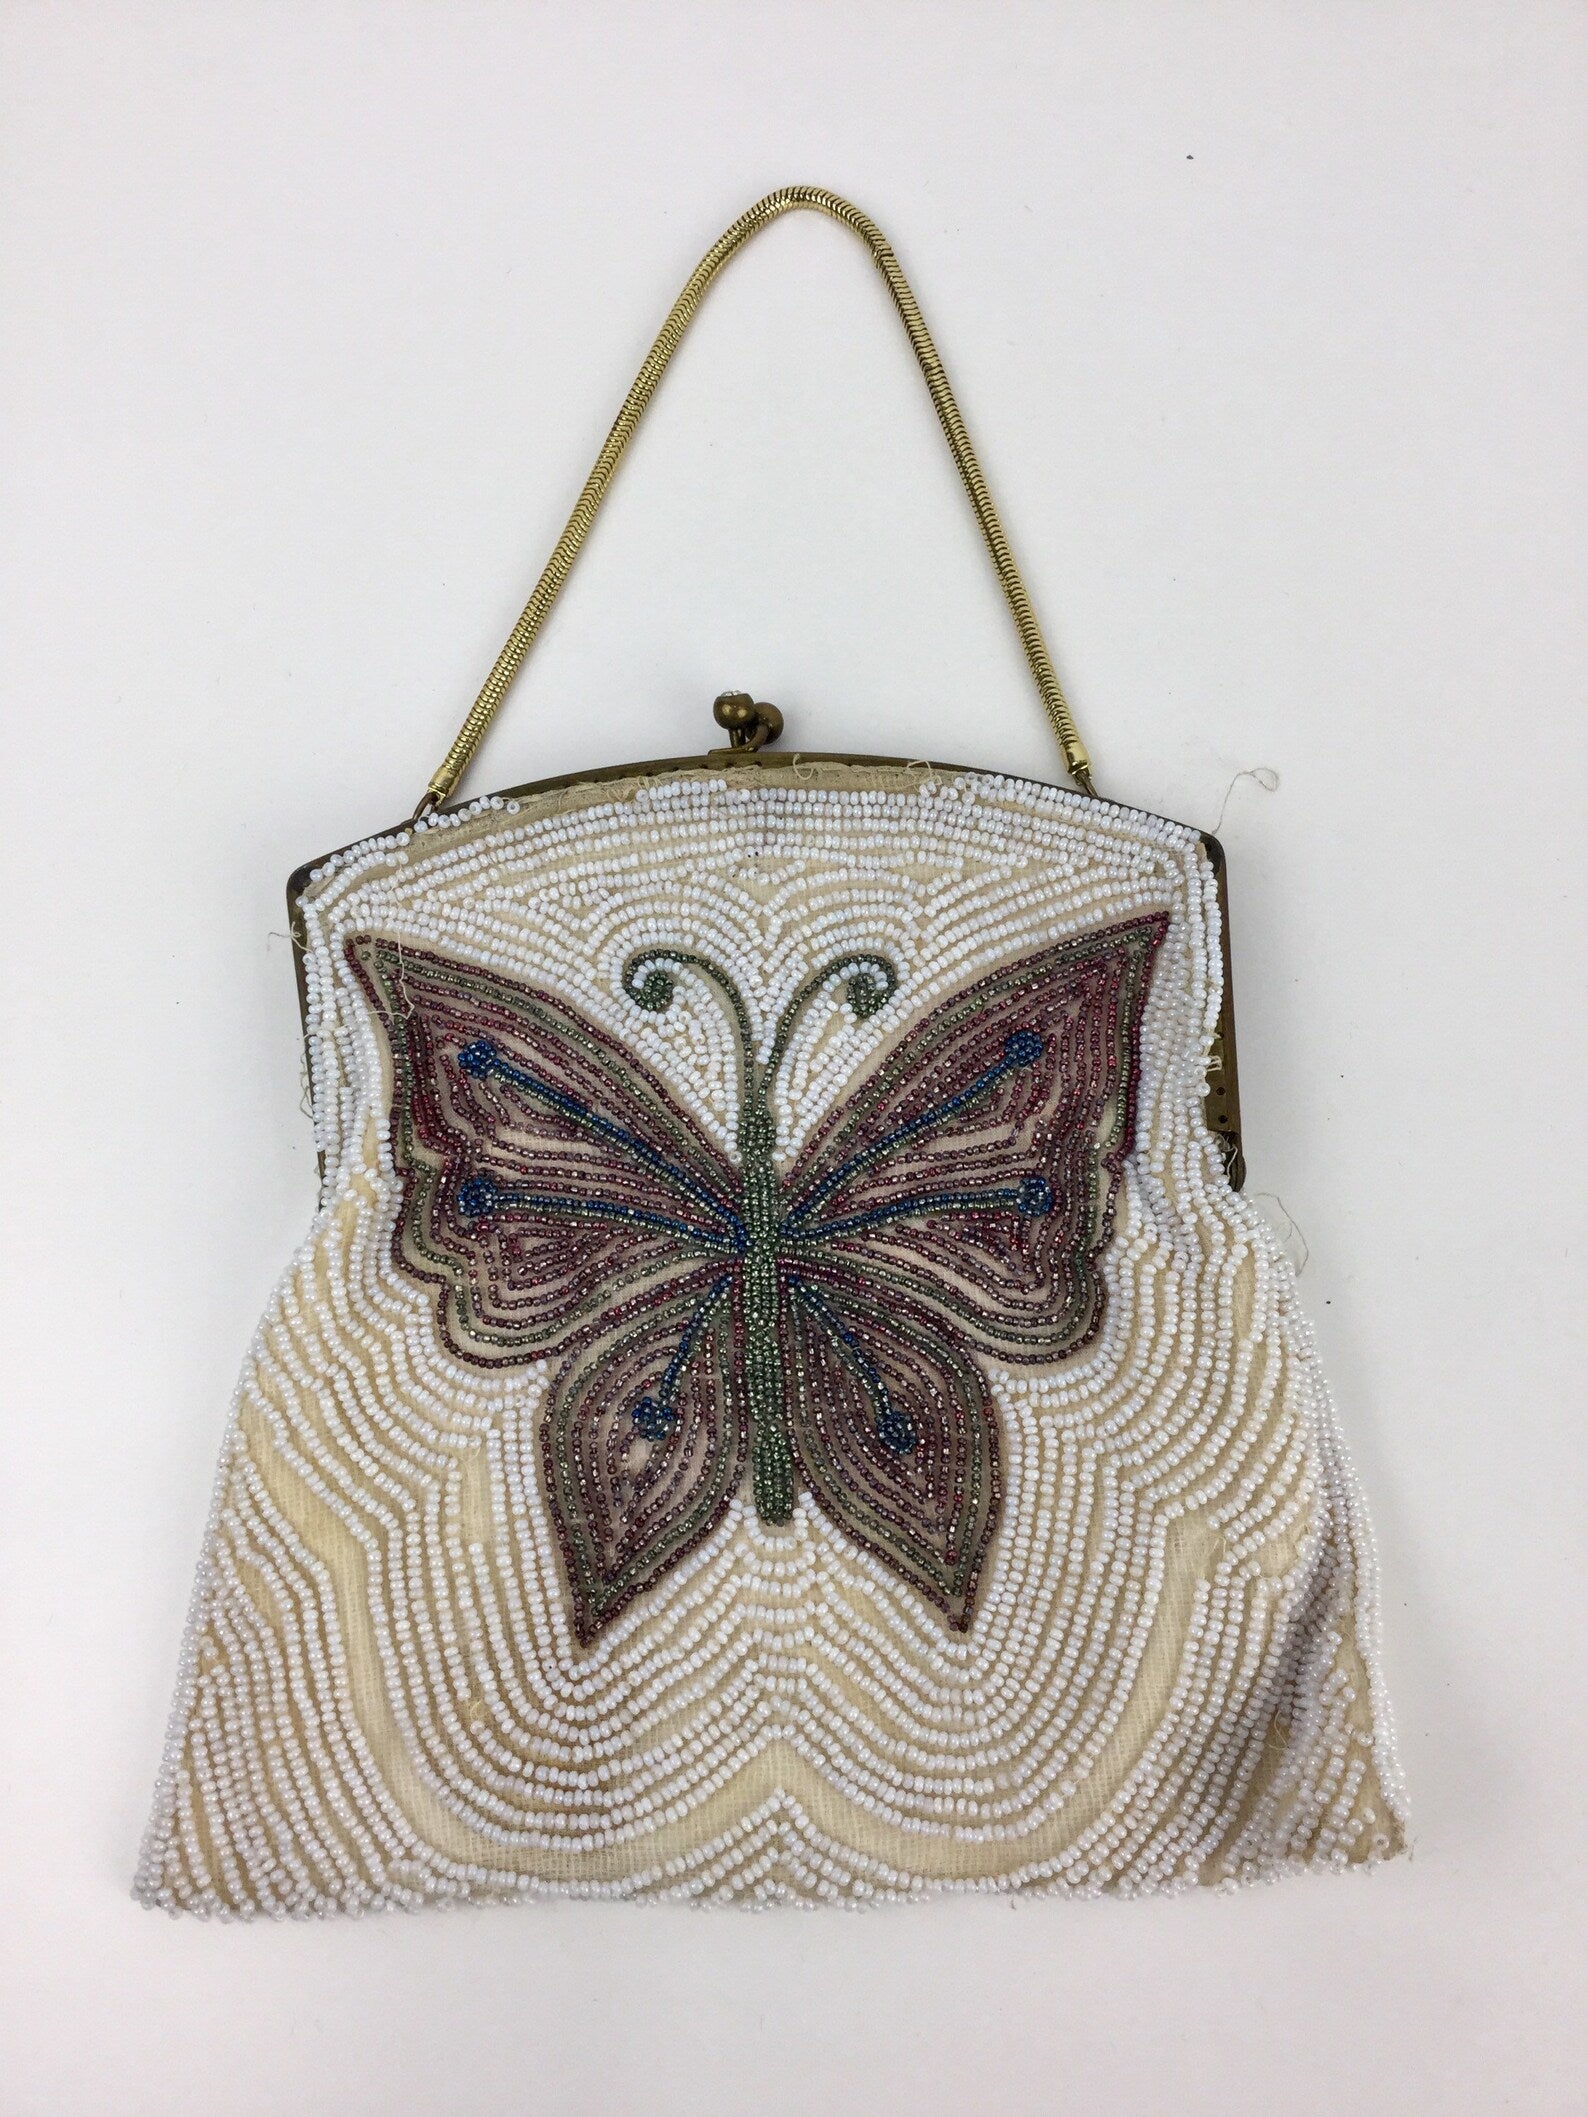 Vintage 1930s/40s Luxury Beaded Designer Purse with Butterfly Motif, Josef Belgium